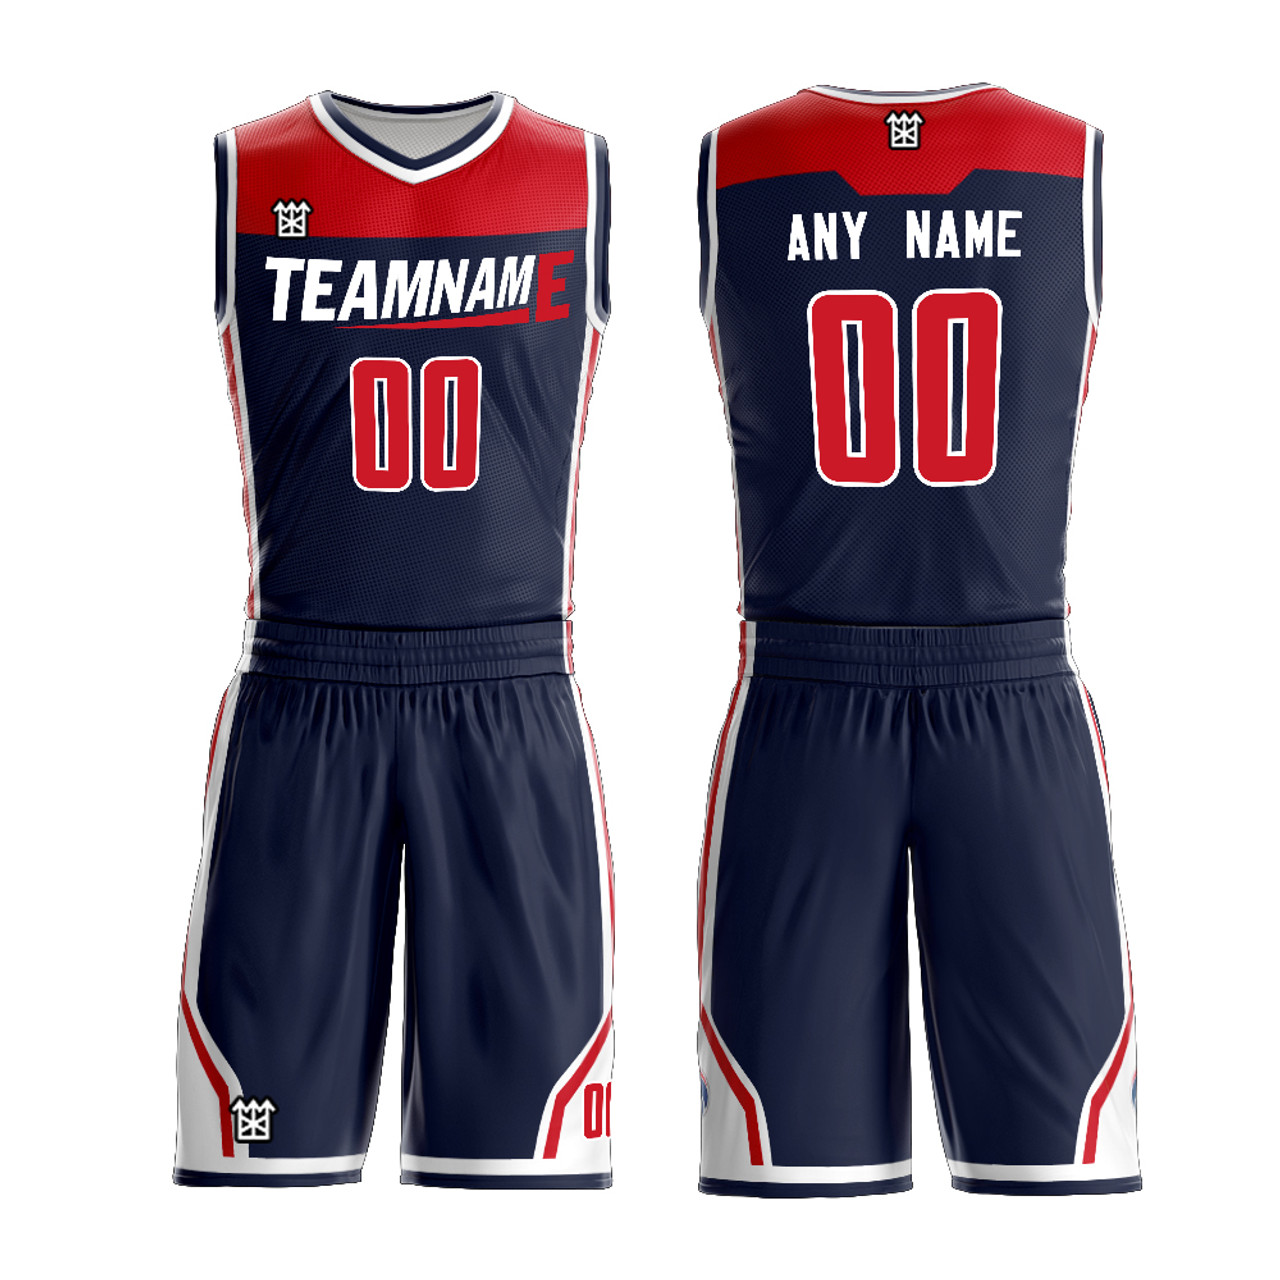 Basketball Jersey Uniform Design Color Navy